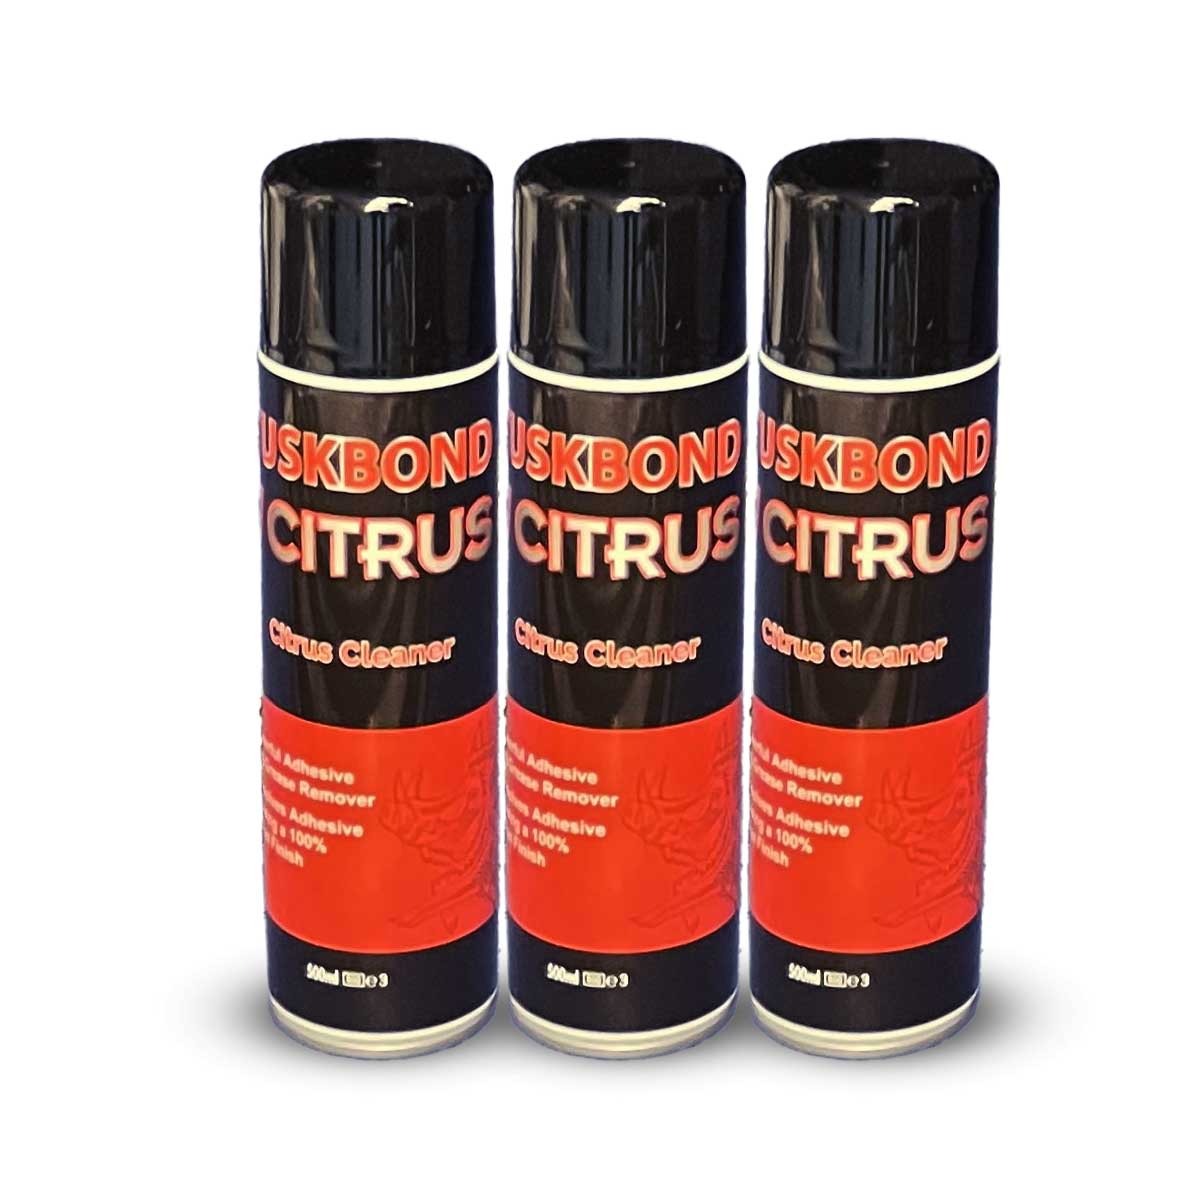 Tuskbond Foam Adhesive and Upholstery Glue  Glue Guns Direct - Glue Guns &  Glue Sticks UK